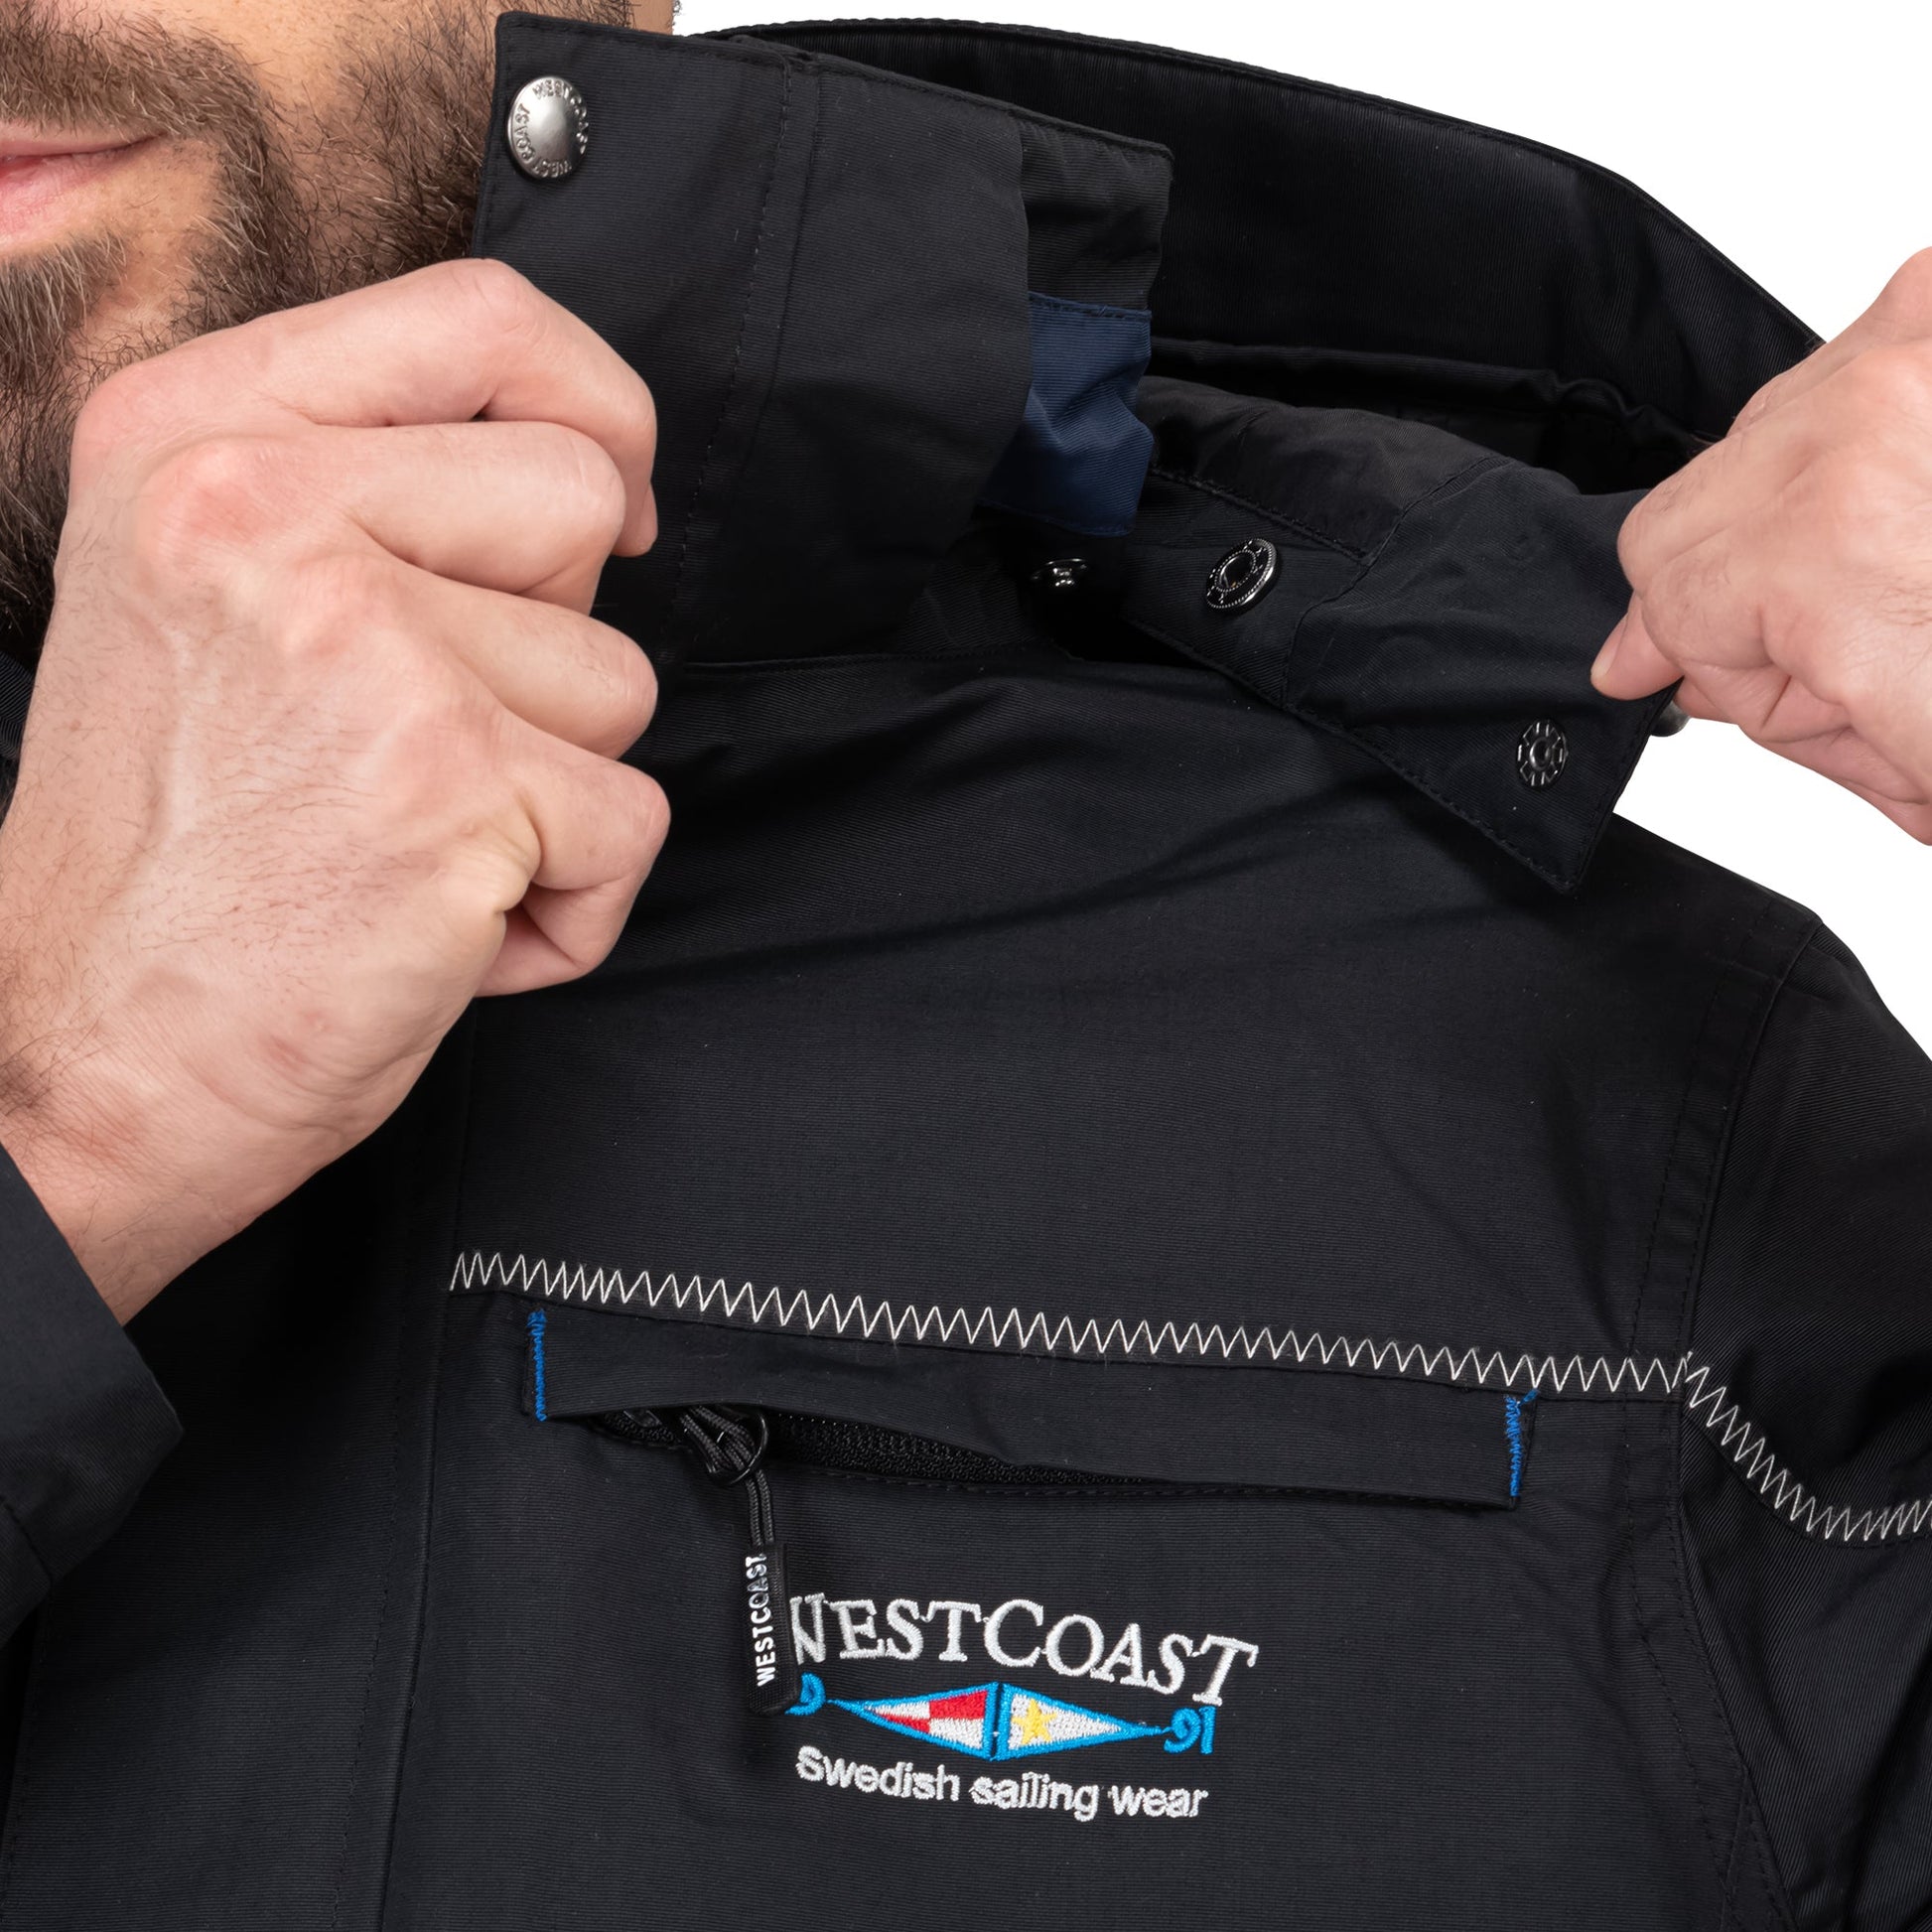 WESTCOAST Men's Functional Outdoor Rain Jacket Sport - WESTCOAST Swedish Sailingwear